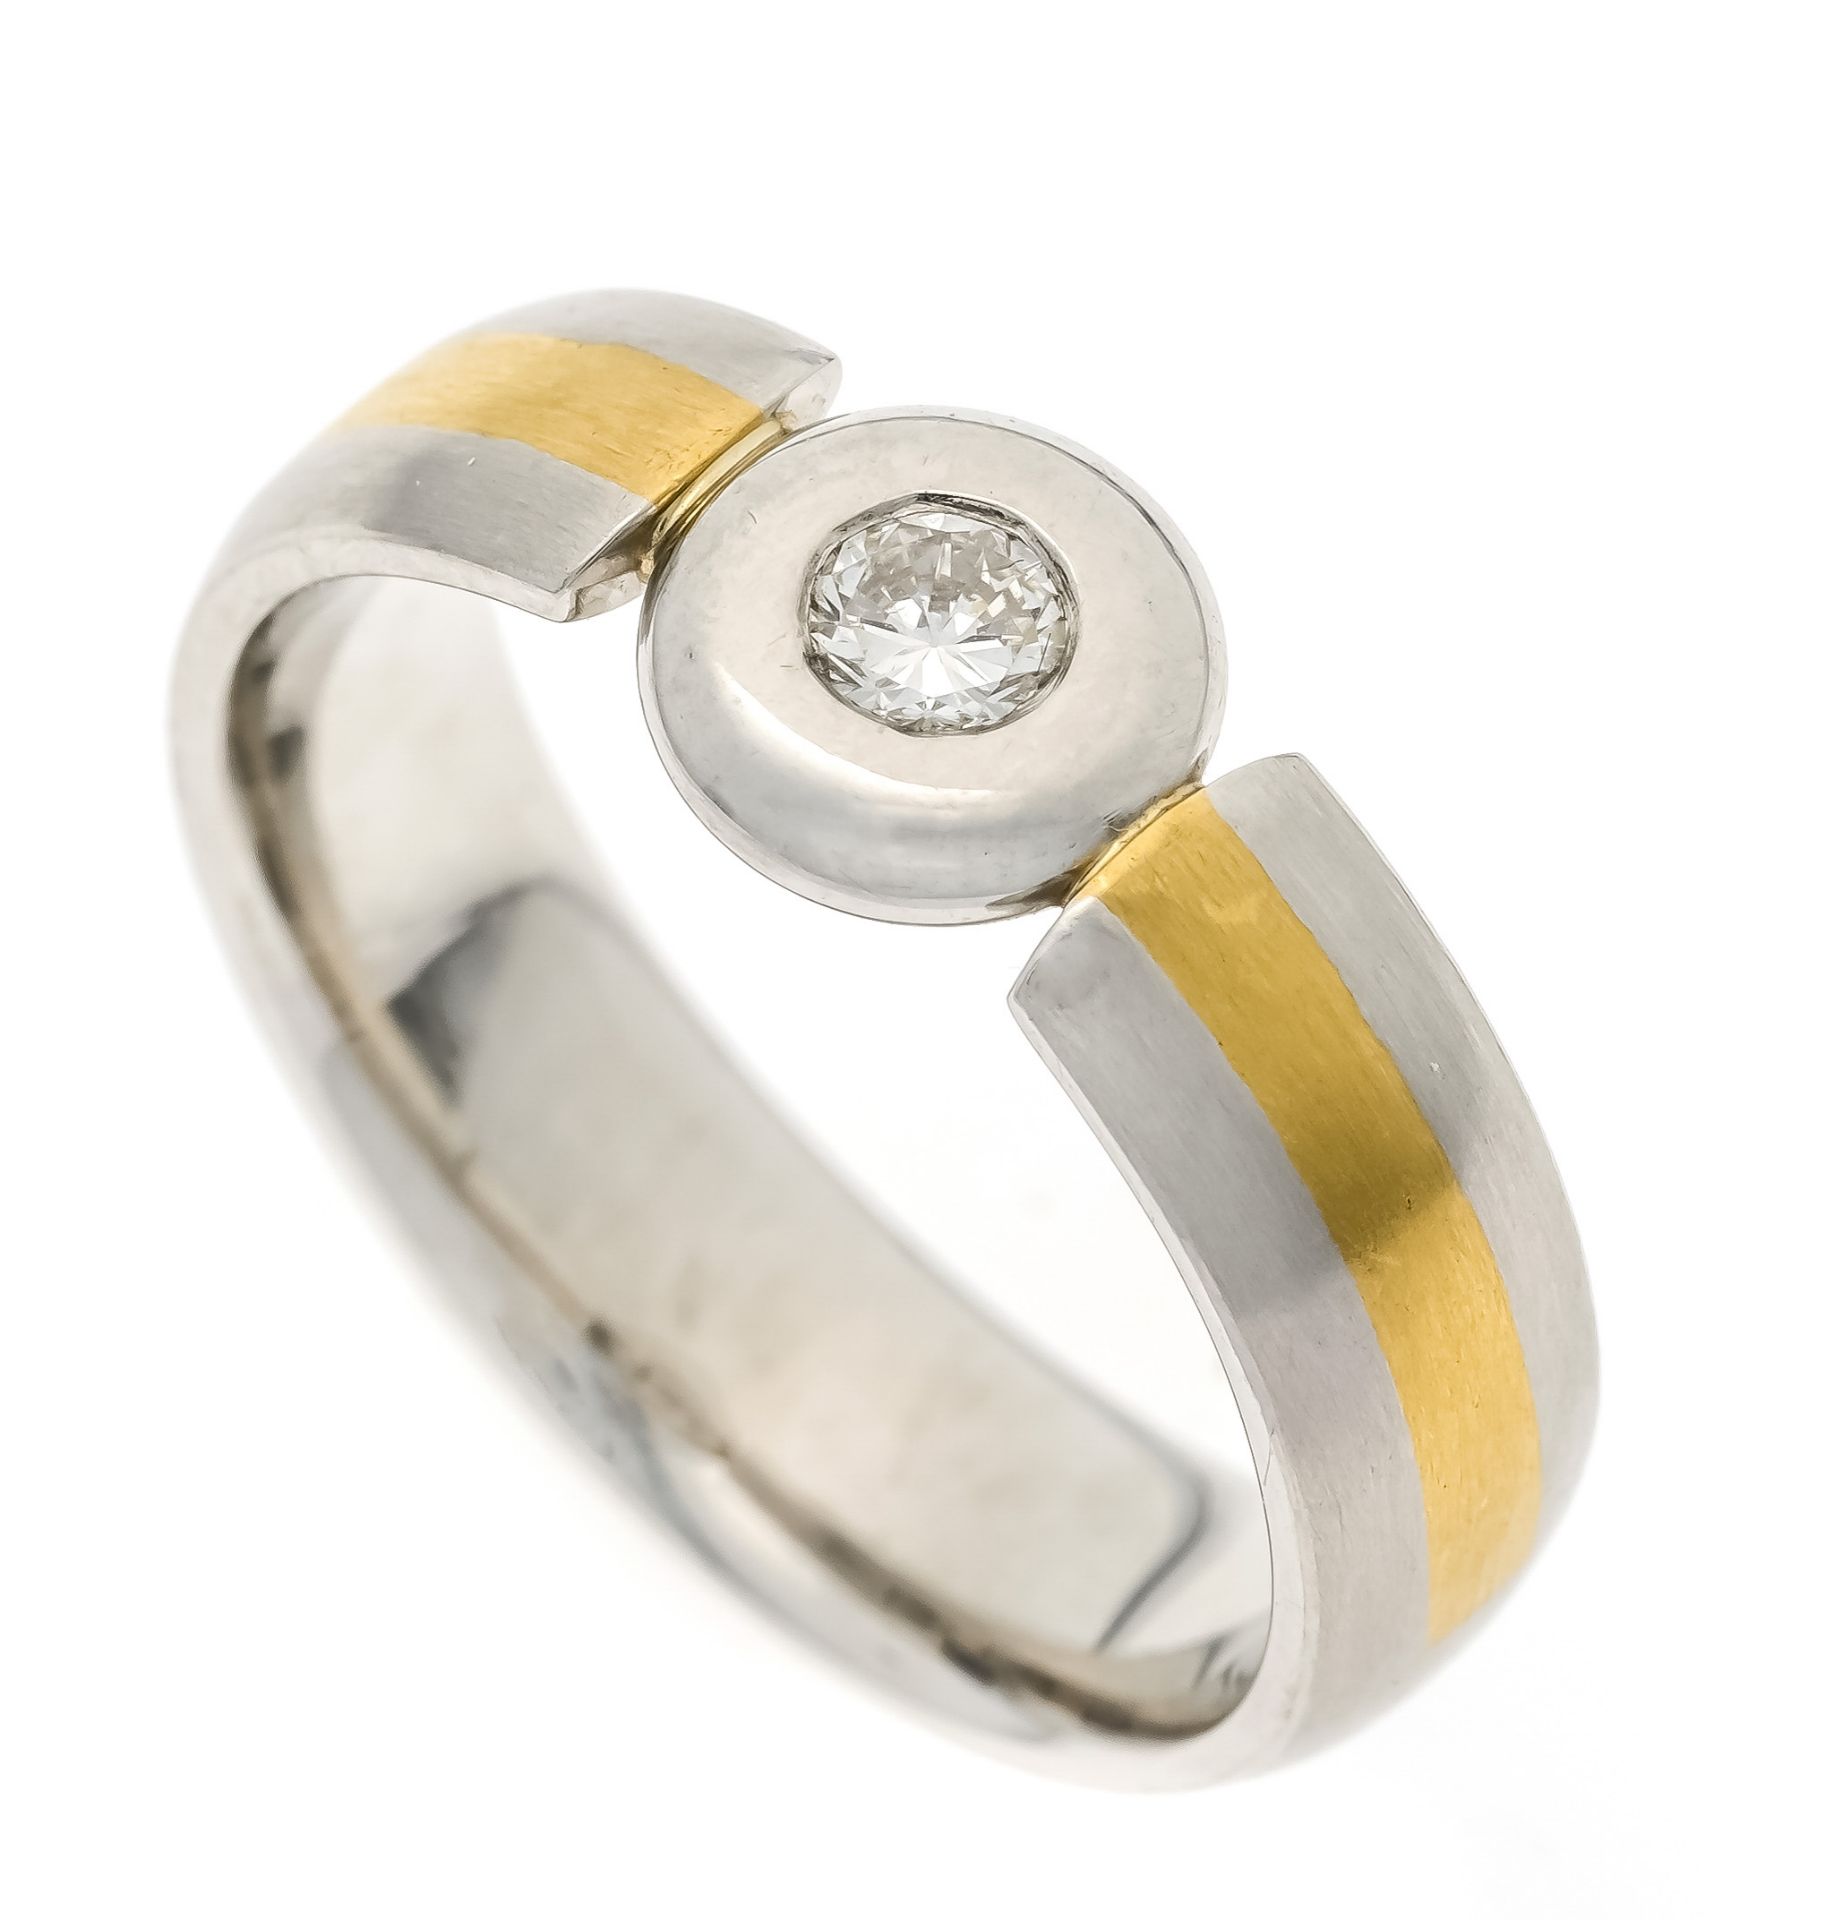 Diamond ring platinum 950/000 and yellow gold with one brilliant-cut diamond 0.12 ct W/VS, RG 55,